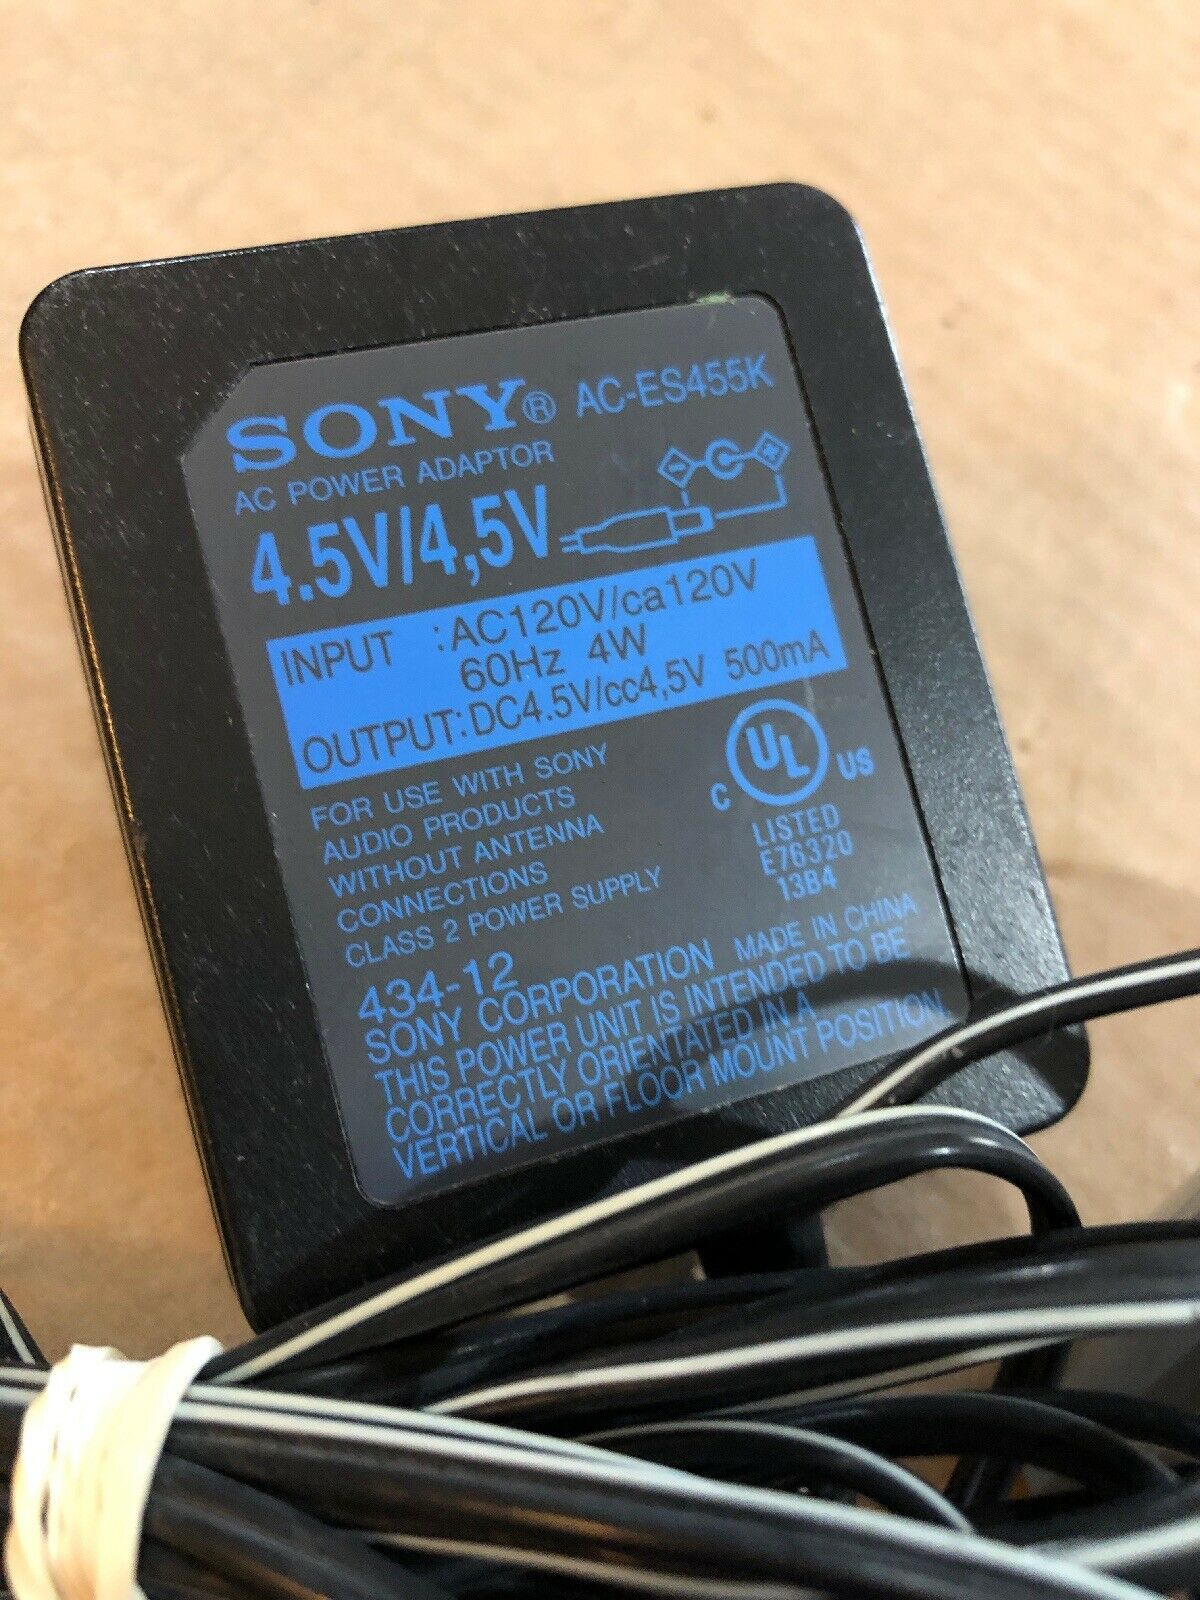 4.5V 500mA AC-ES455K ADAPTER for Sony NWA-UC70D Charging USB Cradle Sony Walkman NW-MS70D